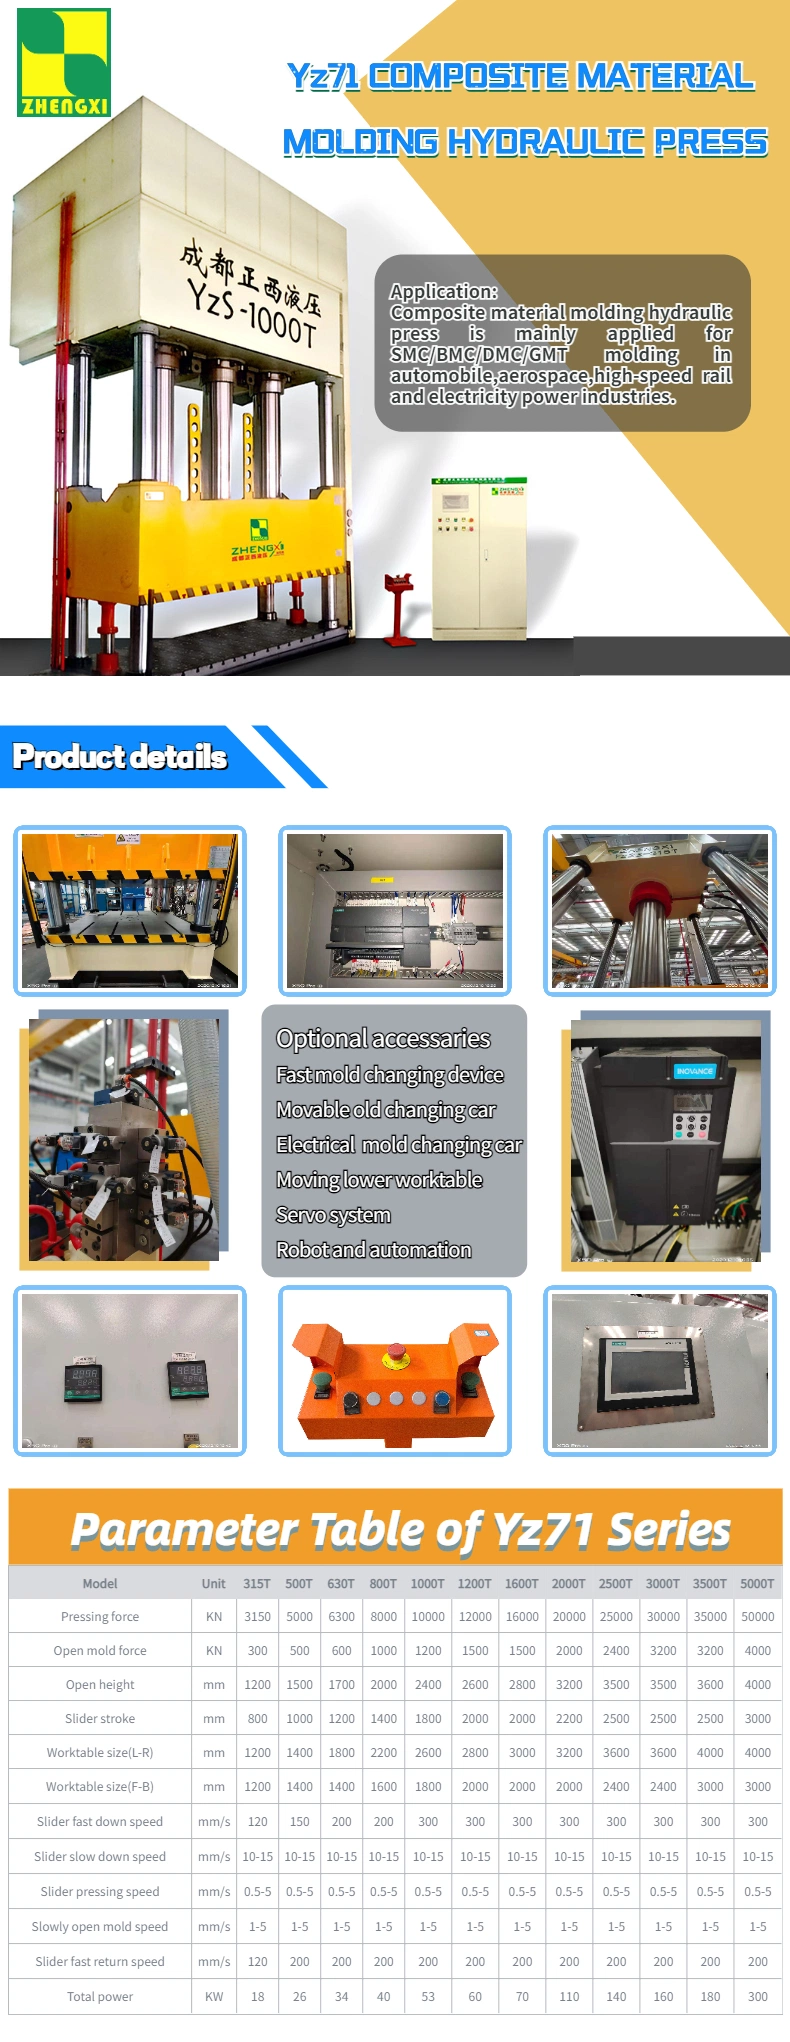 Hydraulic Press Machine for SMC/BMC/Gmt/FRP Composite Material